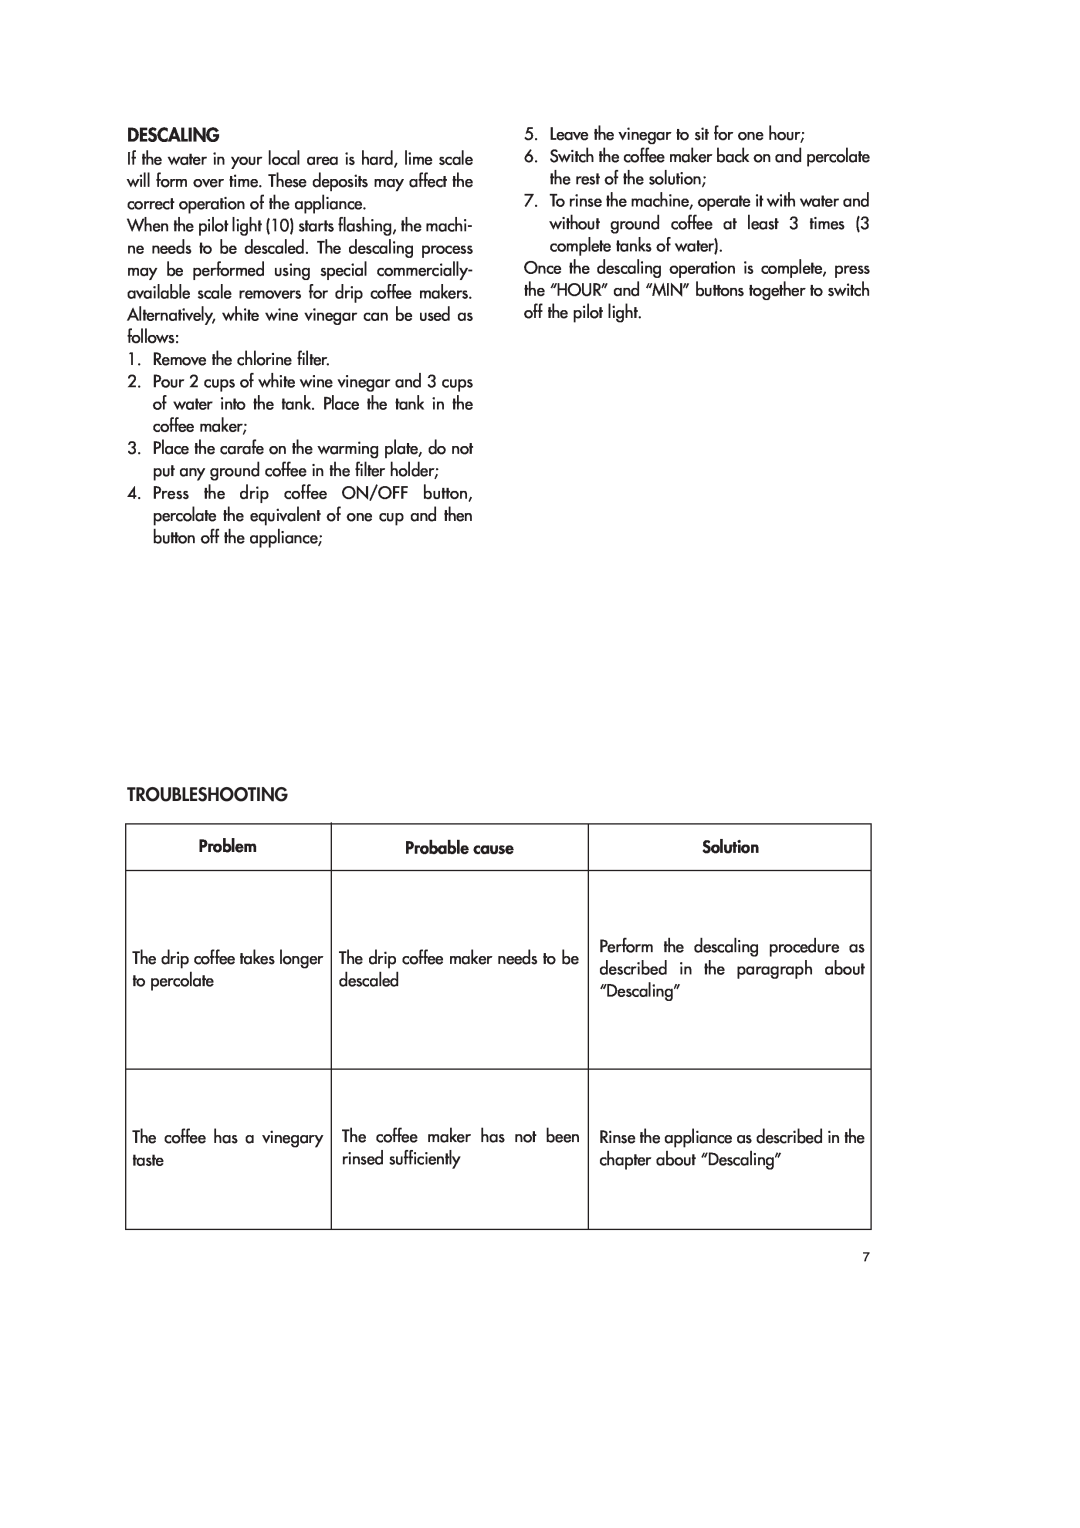 DeLonghi ICM18 WB instruction manual Descaling, Troubleshooting 